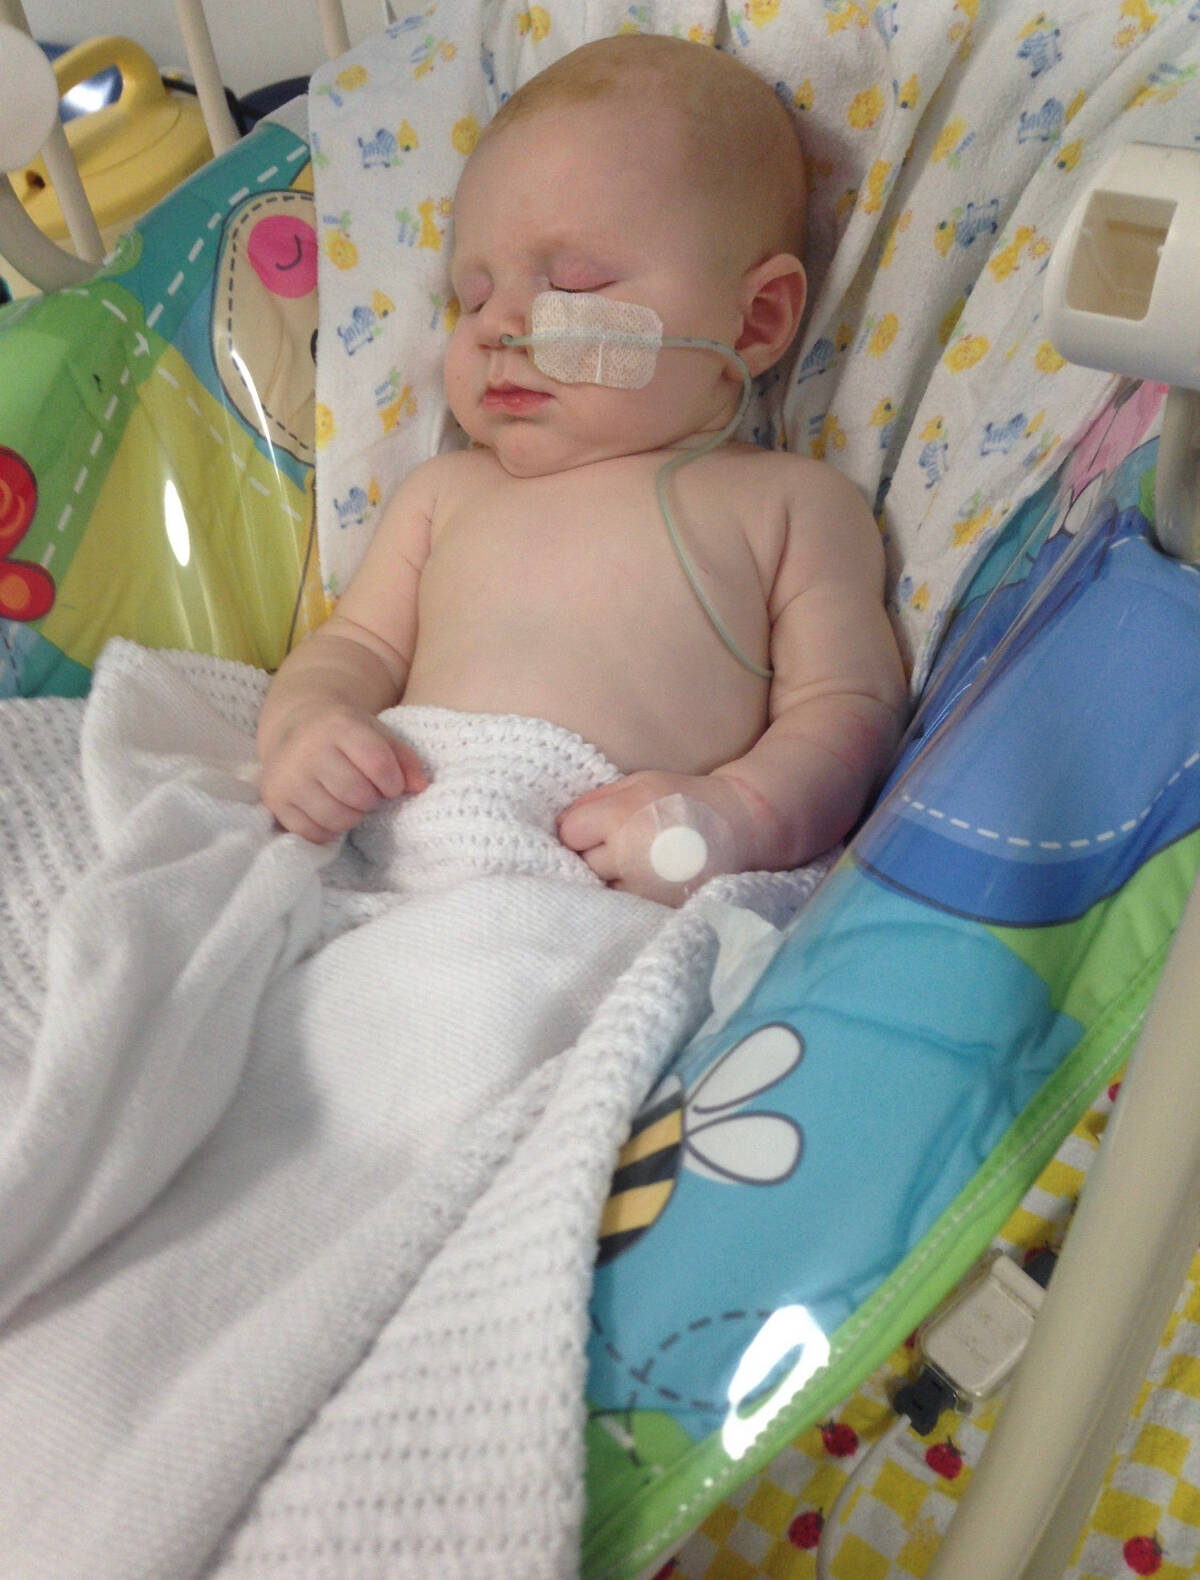 Make-A-Wish Australia wish kid Levi asleep in a cot in hospital